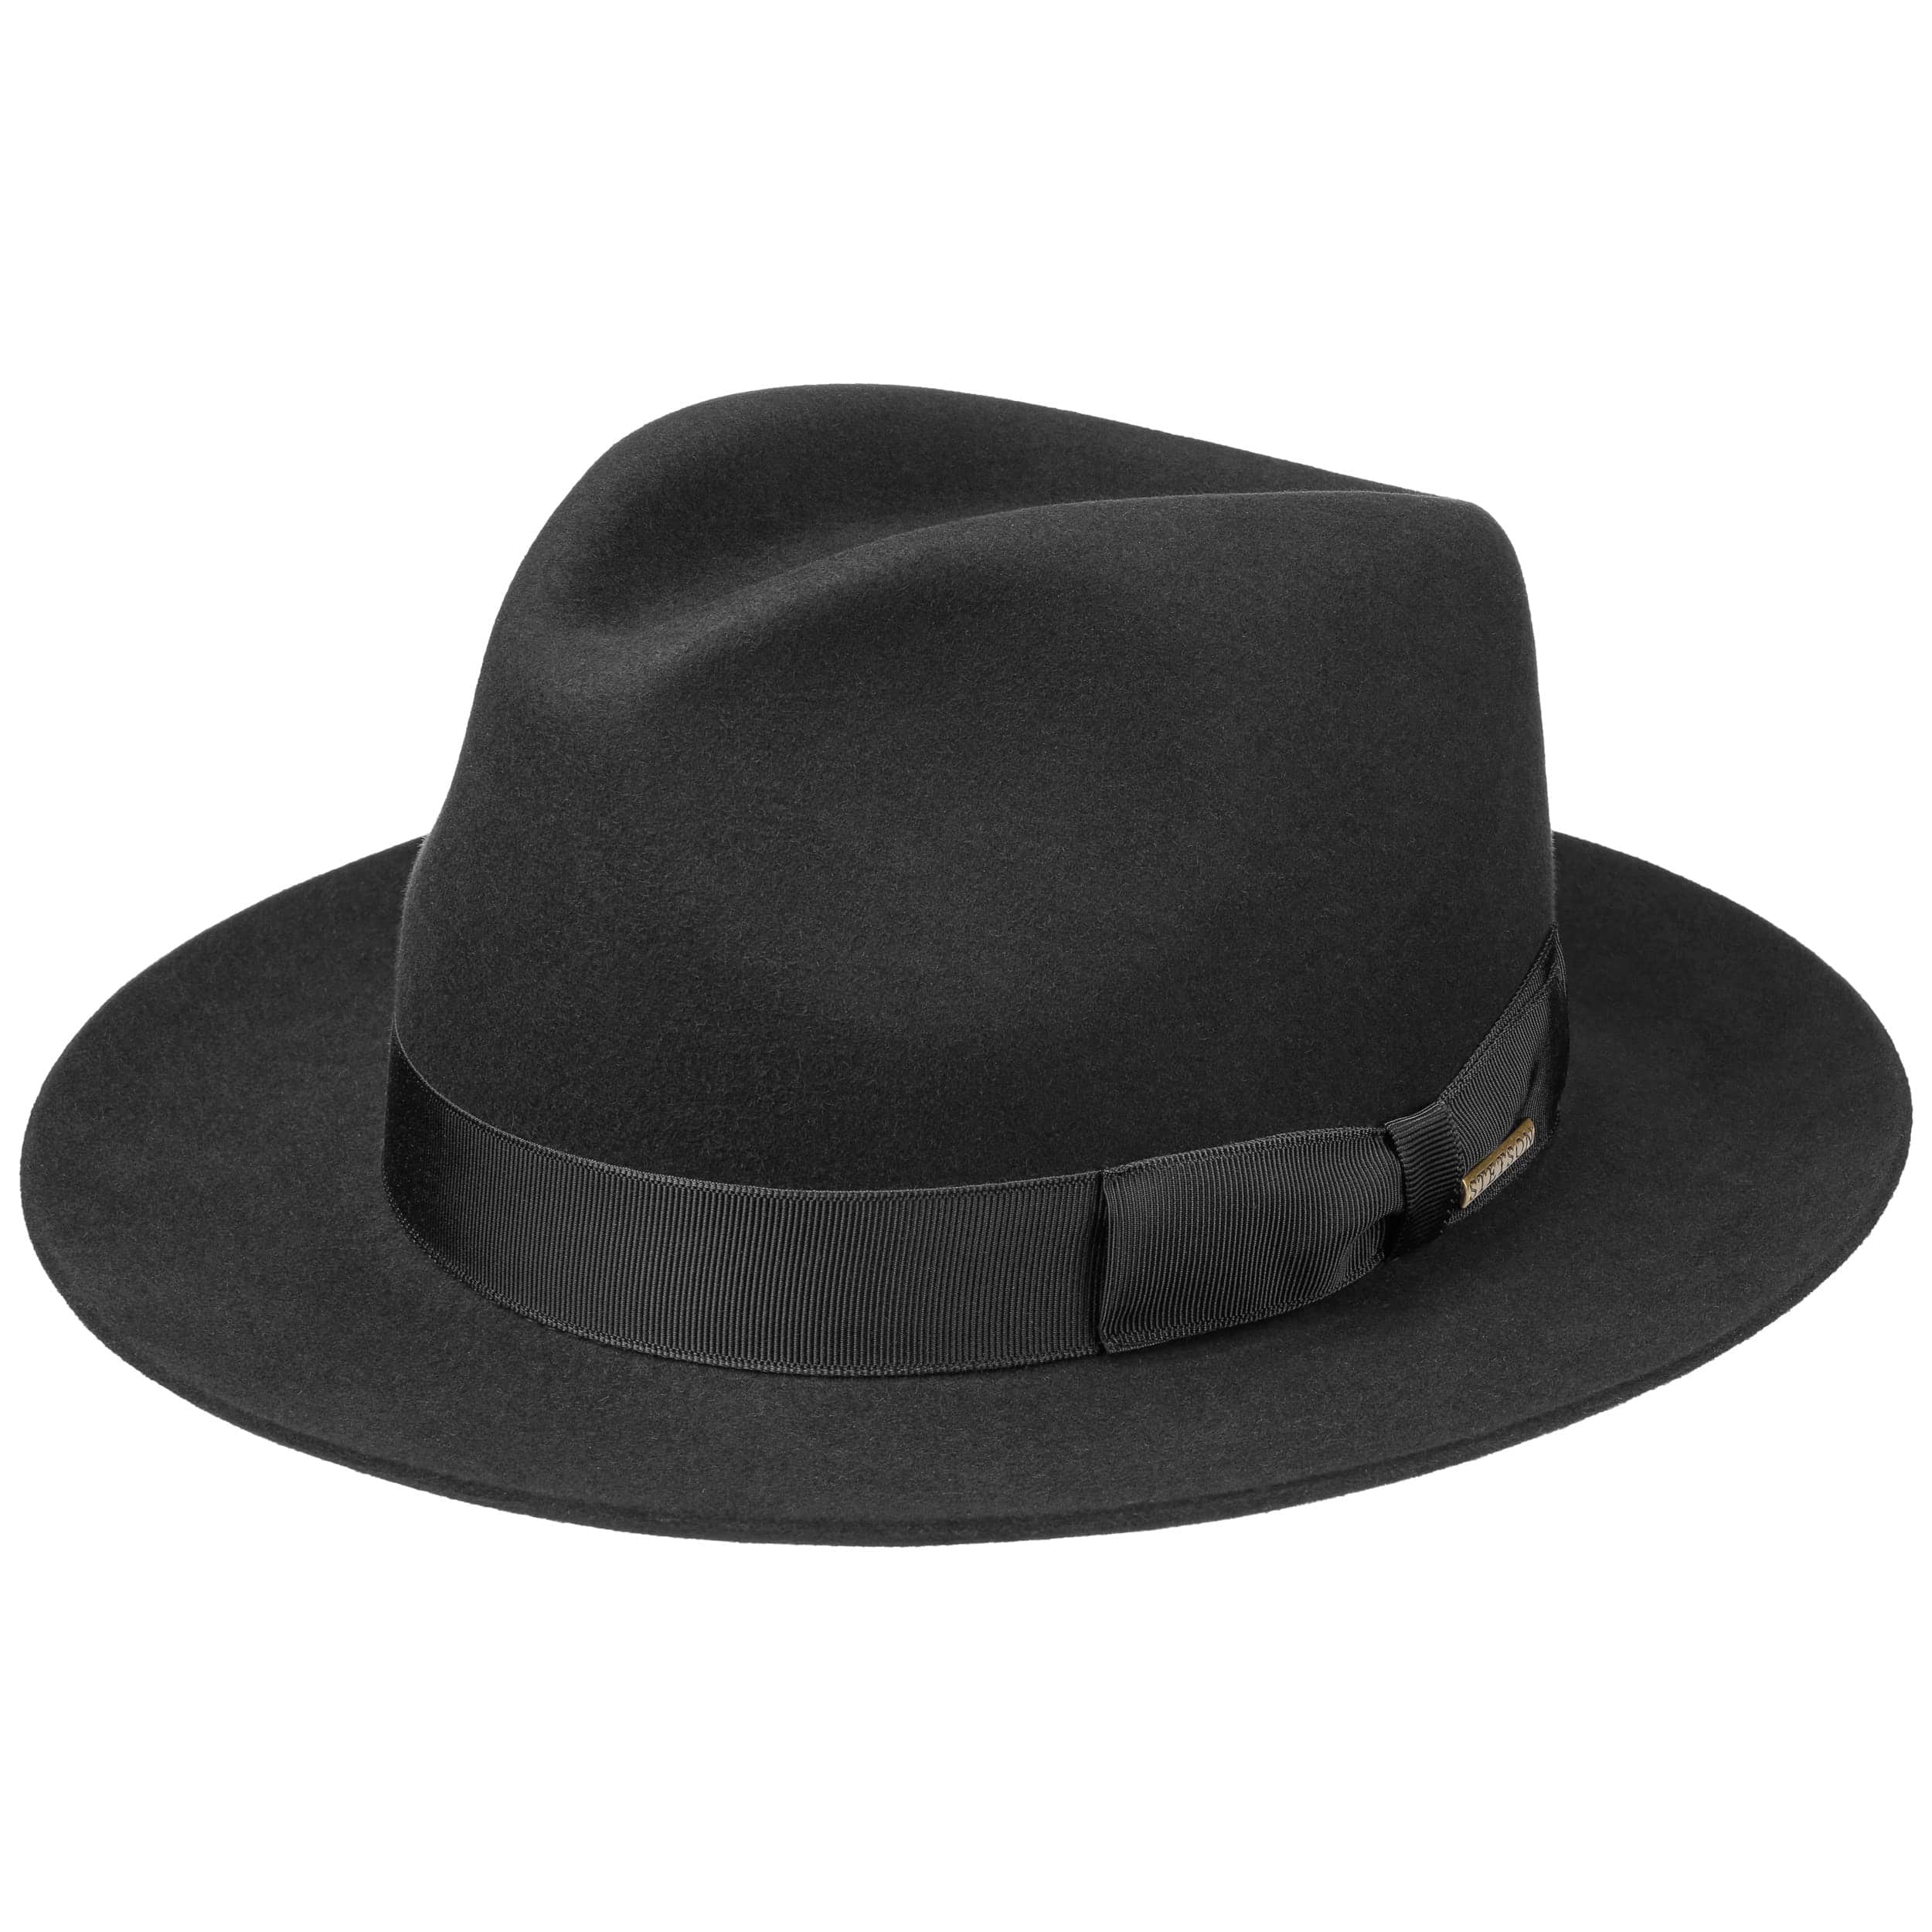 Penn Bogart Hat by Stetson - 349,00